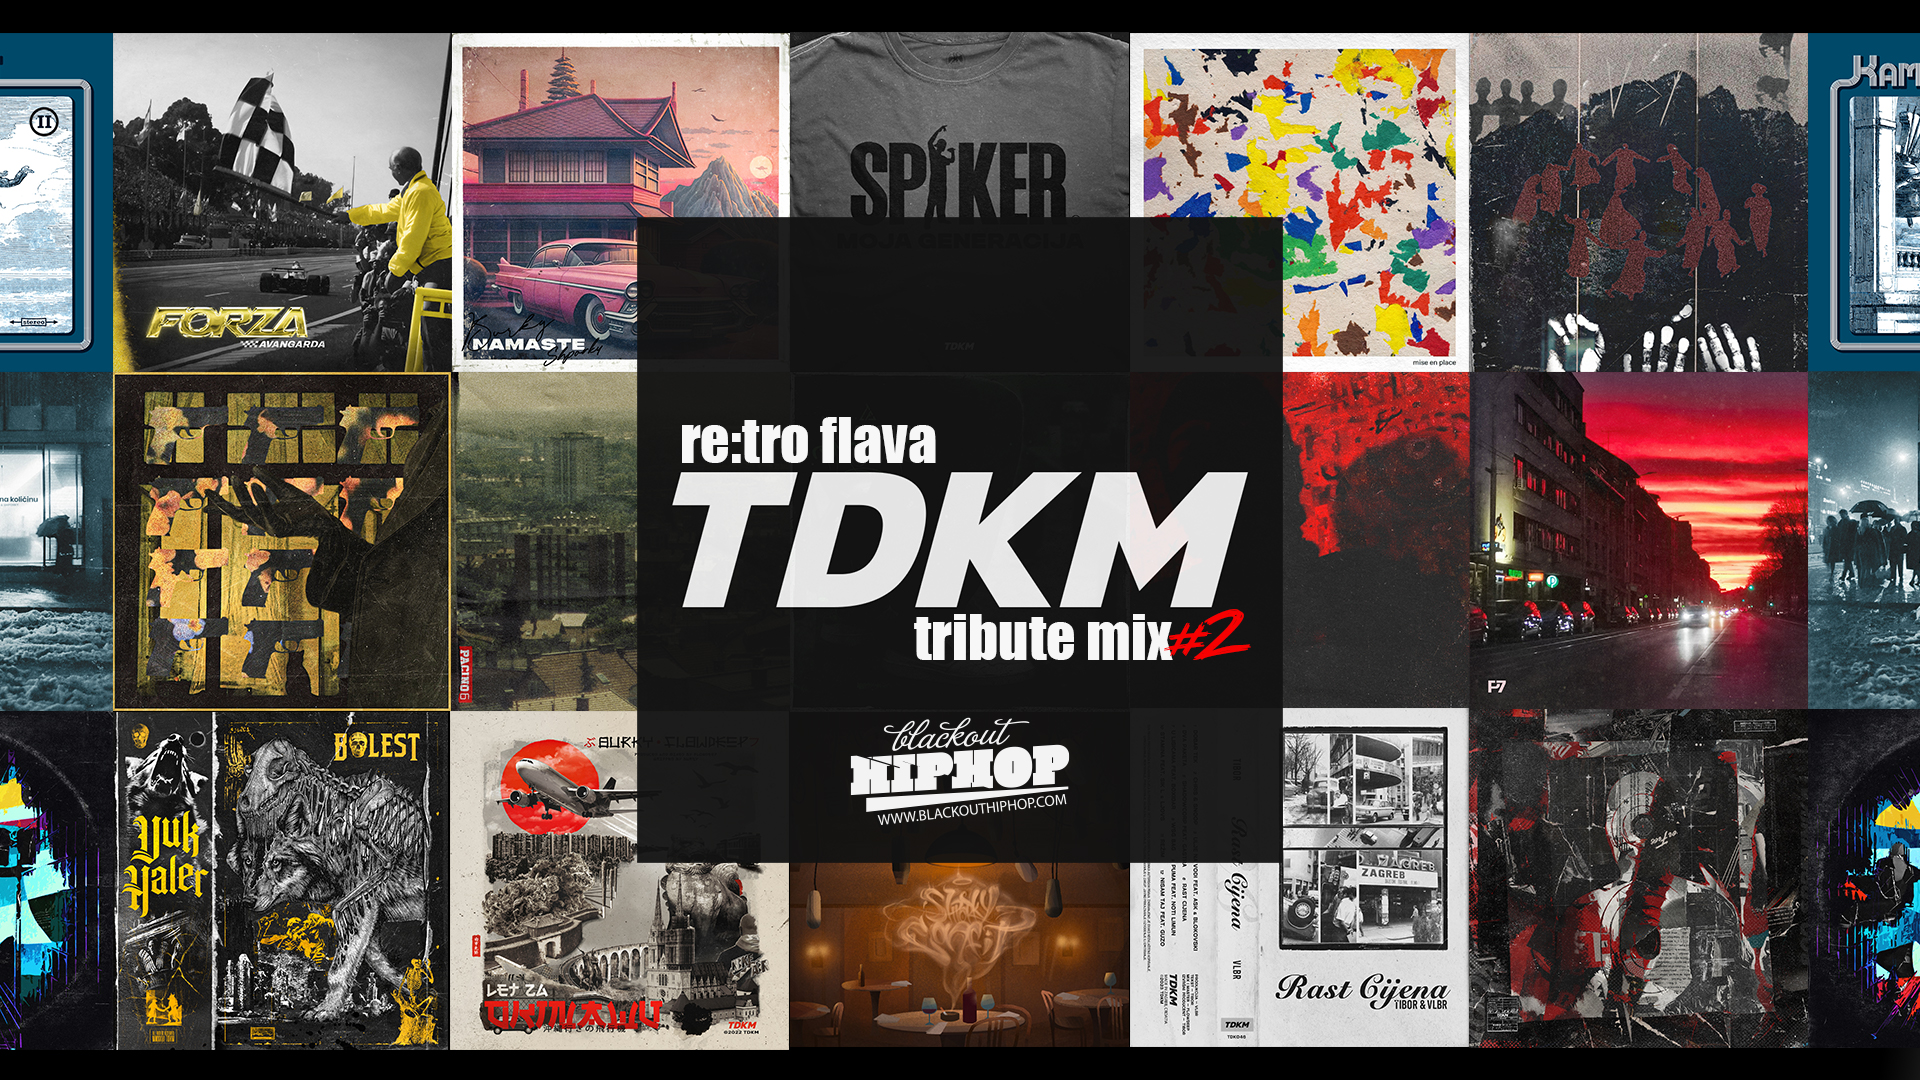 Re:tro flava – TDKM Tribute Mix #2